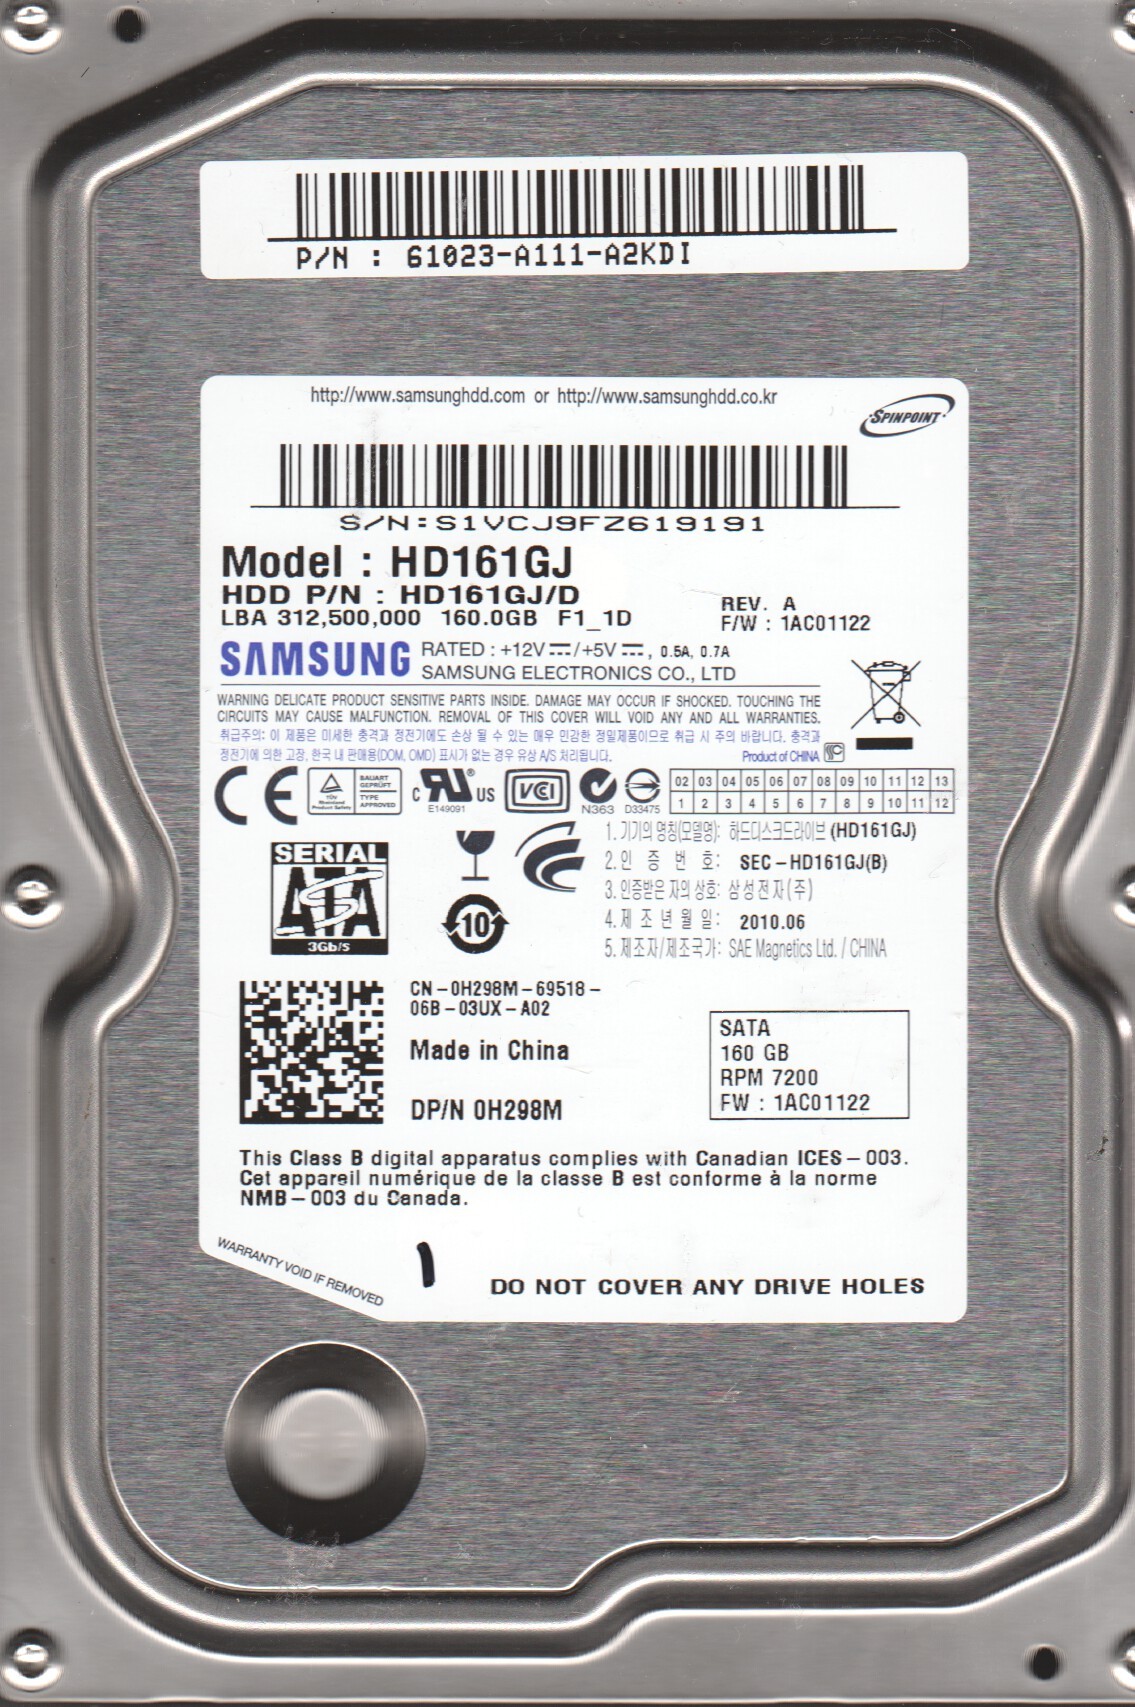 Samsung HD161GJ internal 160 GB 7200rpm Hard disk large image 0